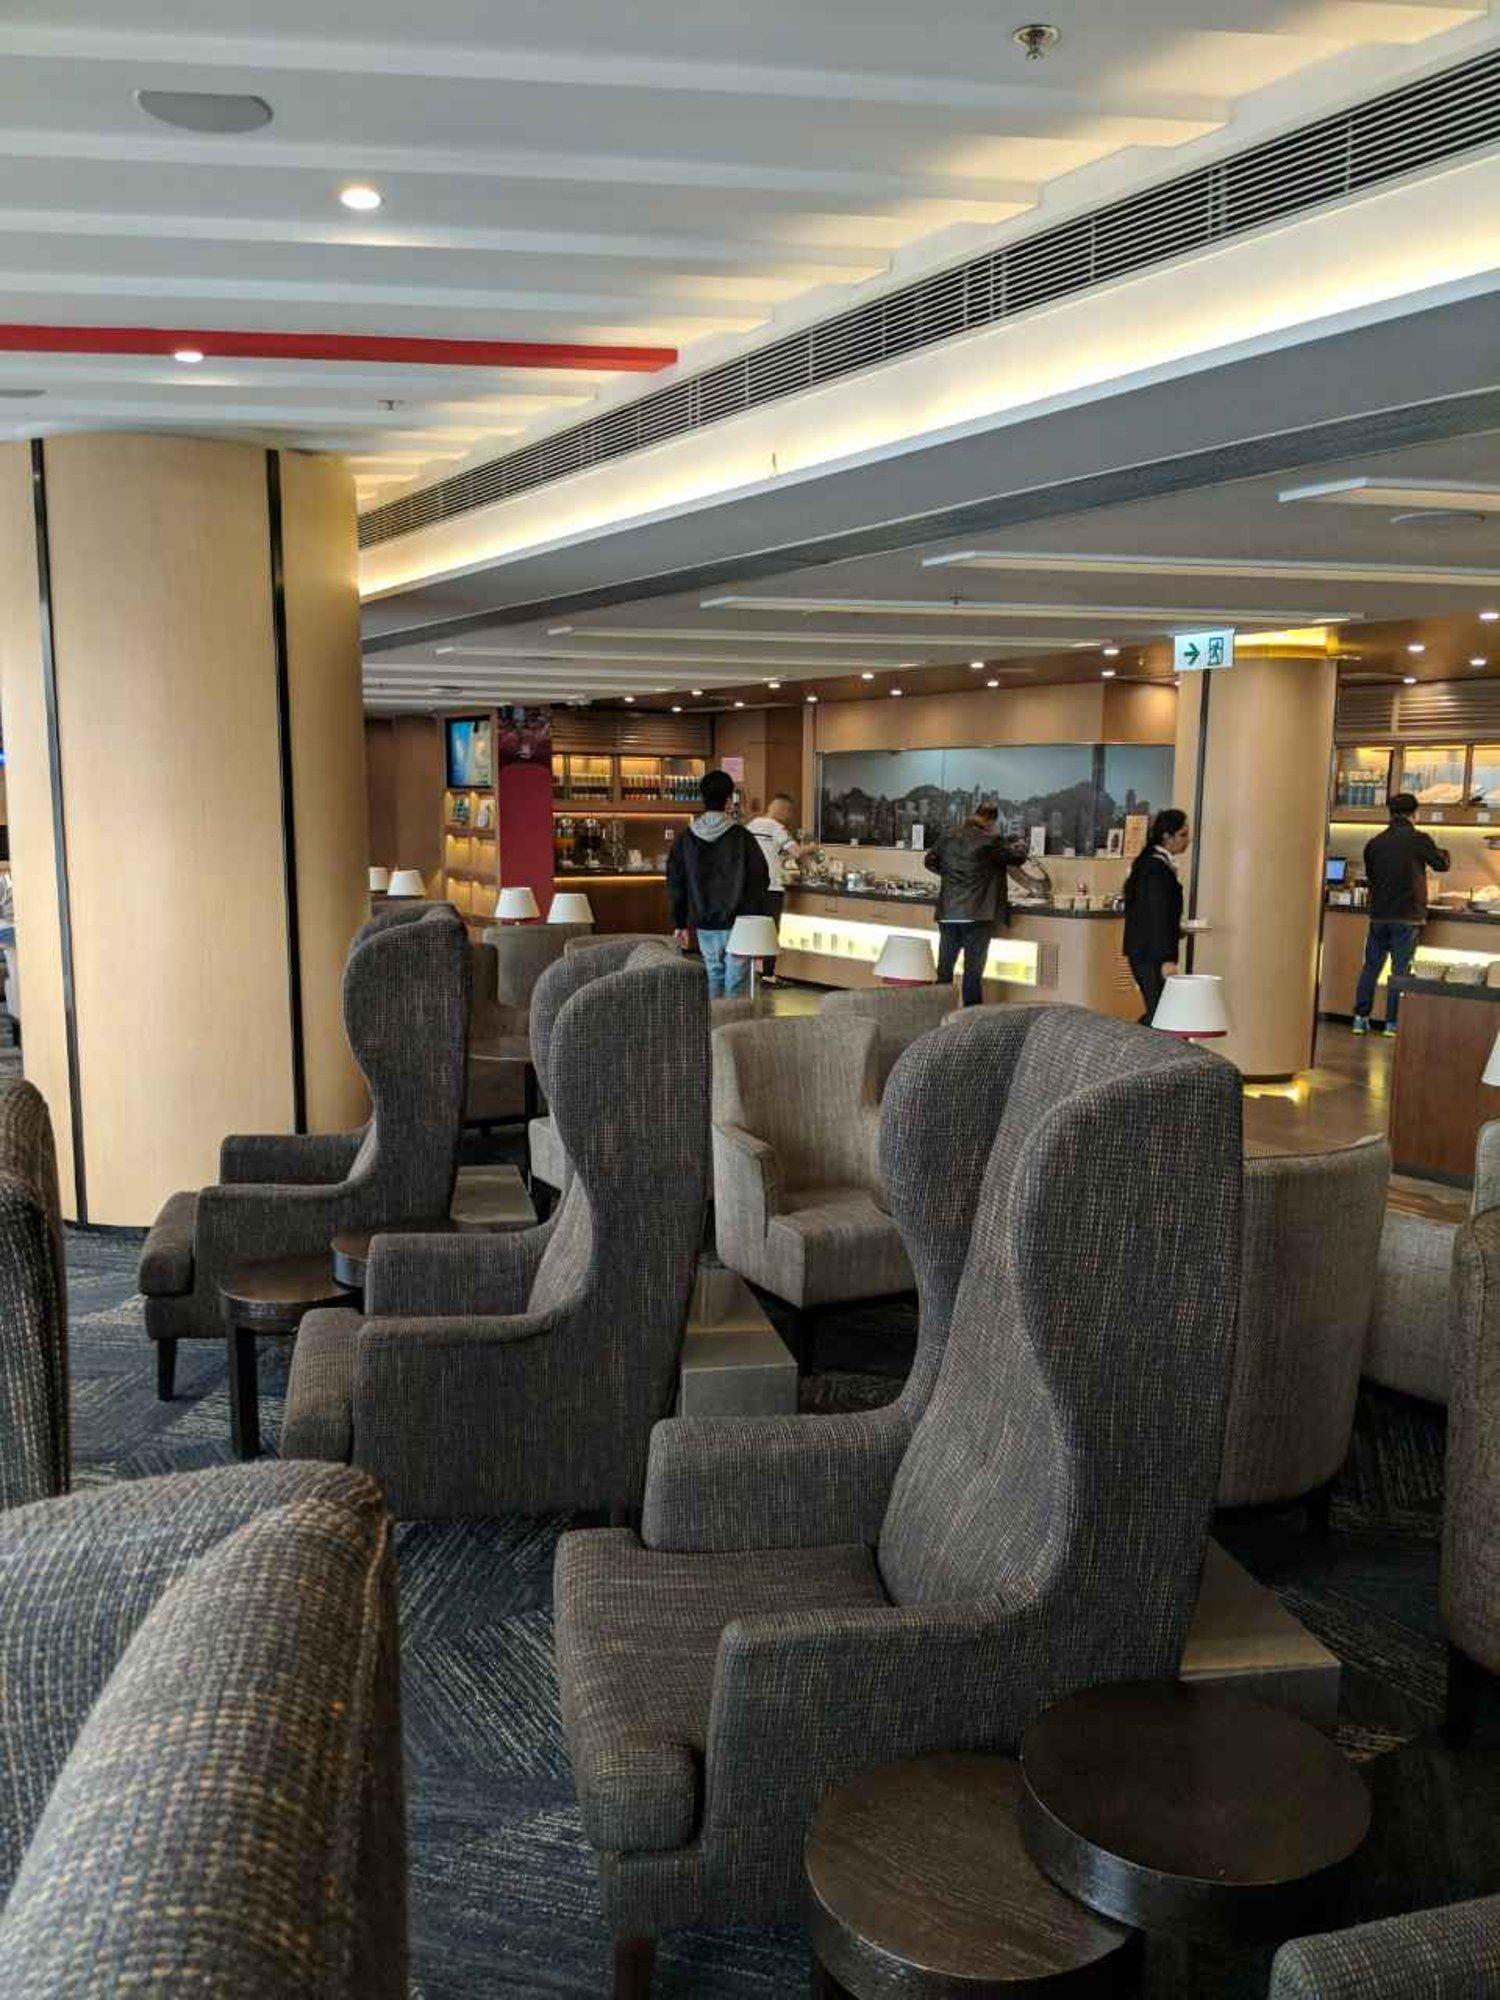 Hong Kong Airlines VIP Lounge (Club Bauhinia) image 13 of 40